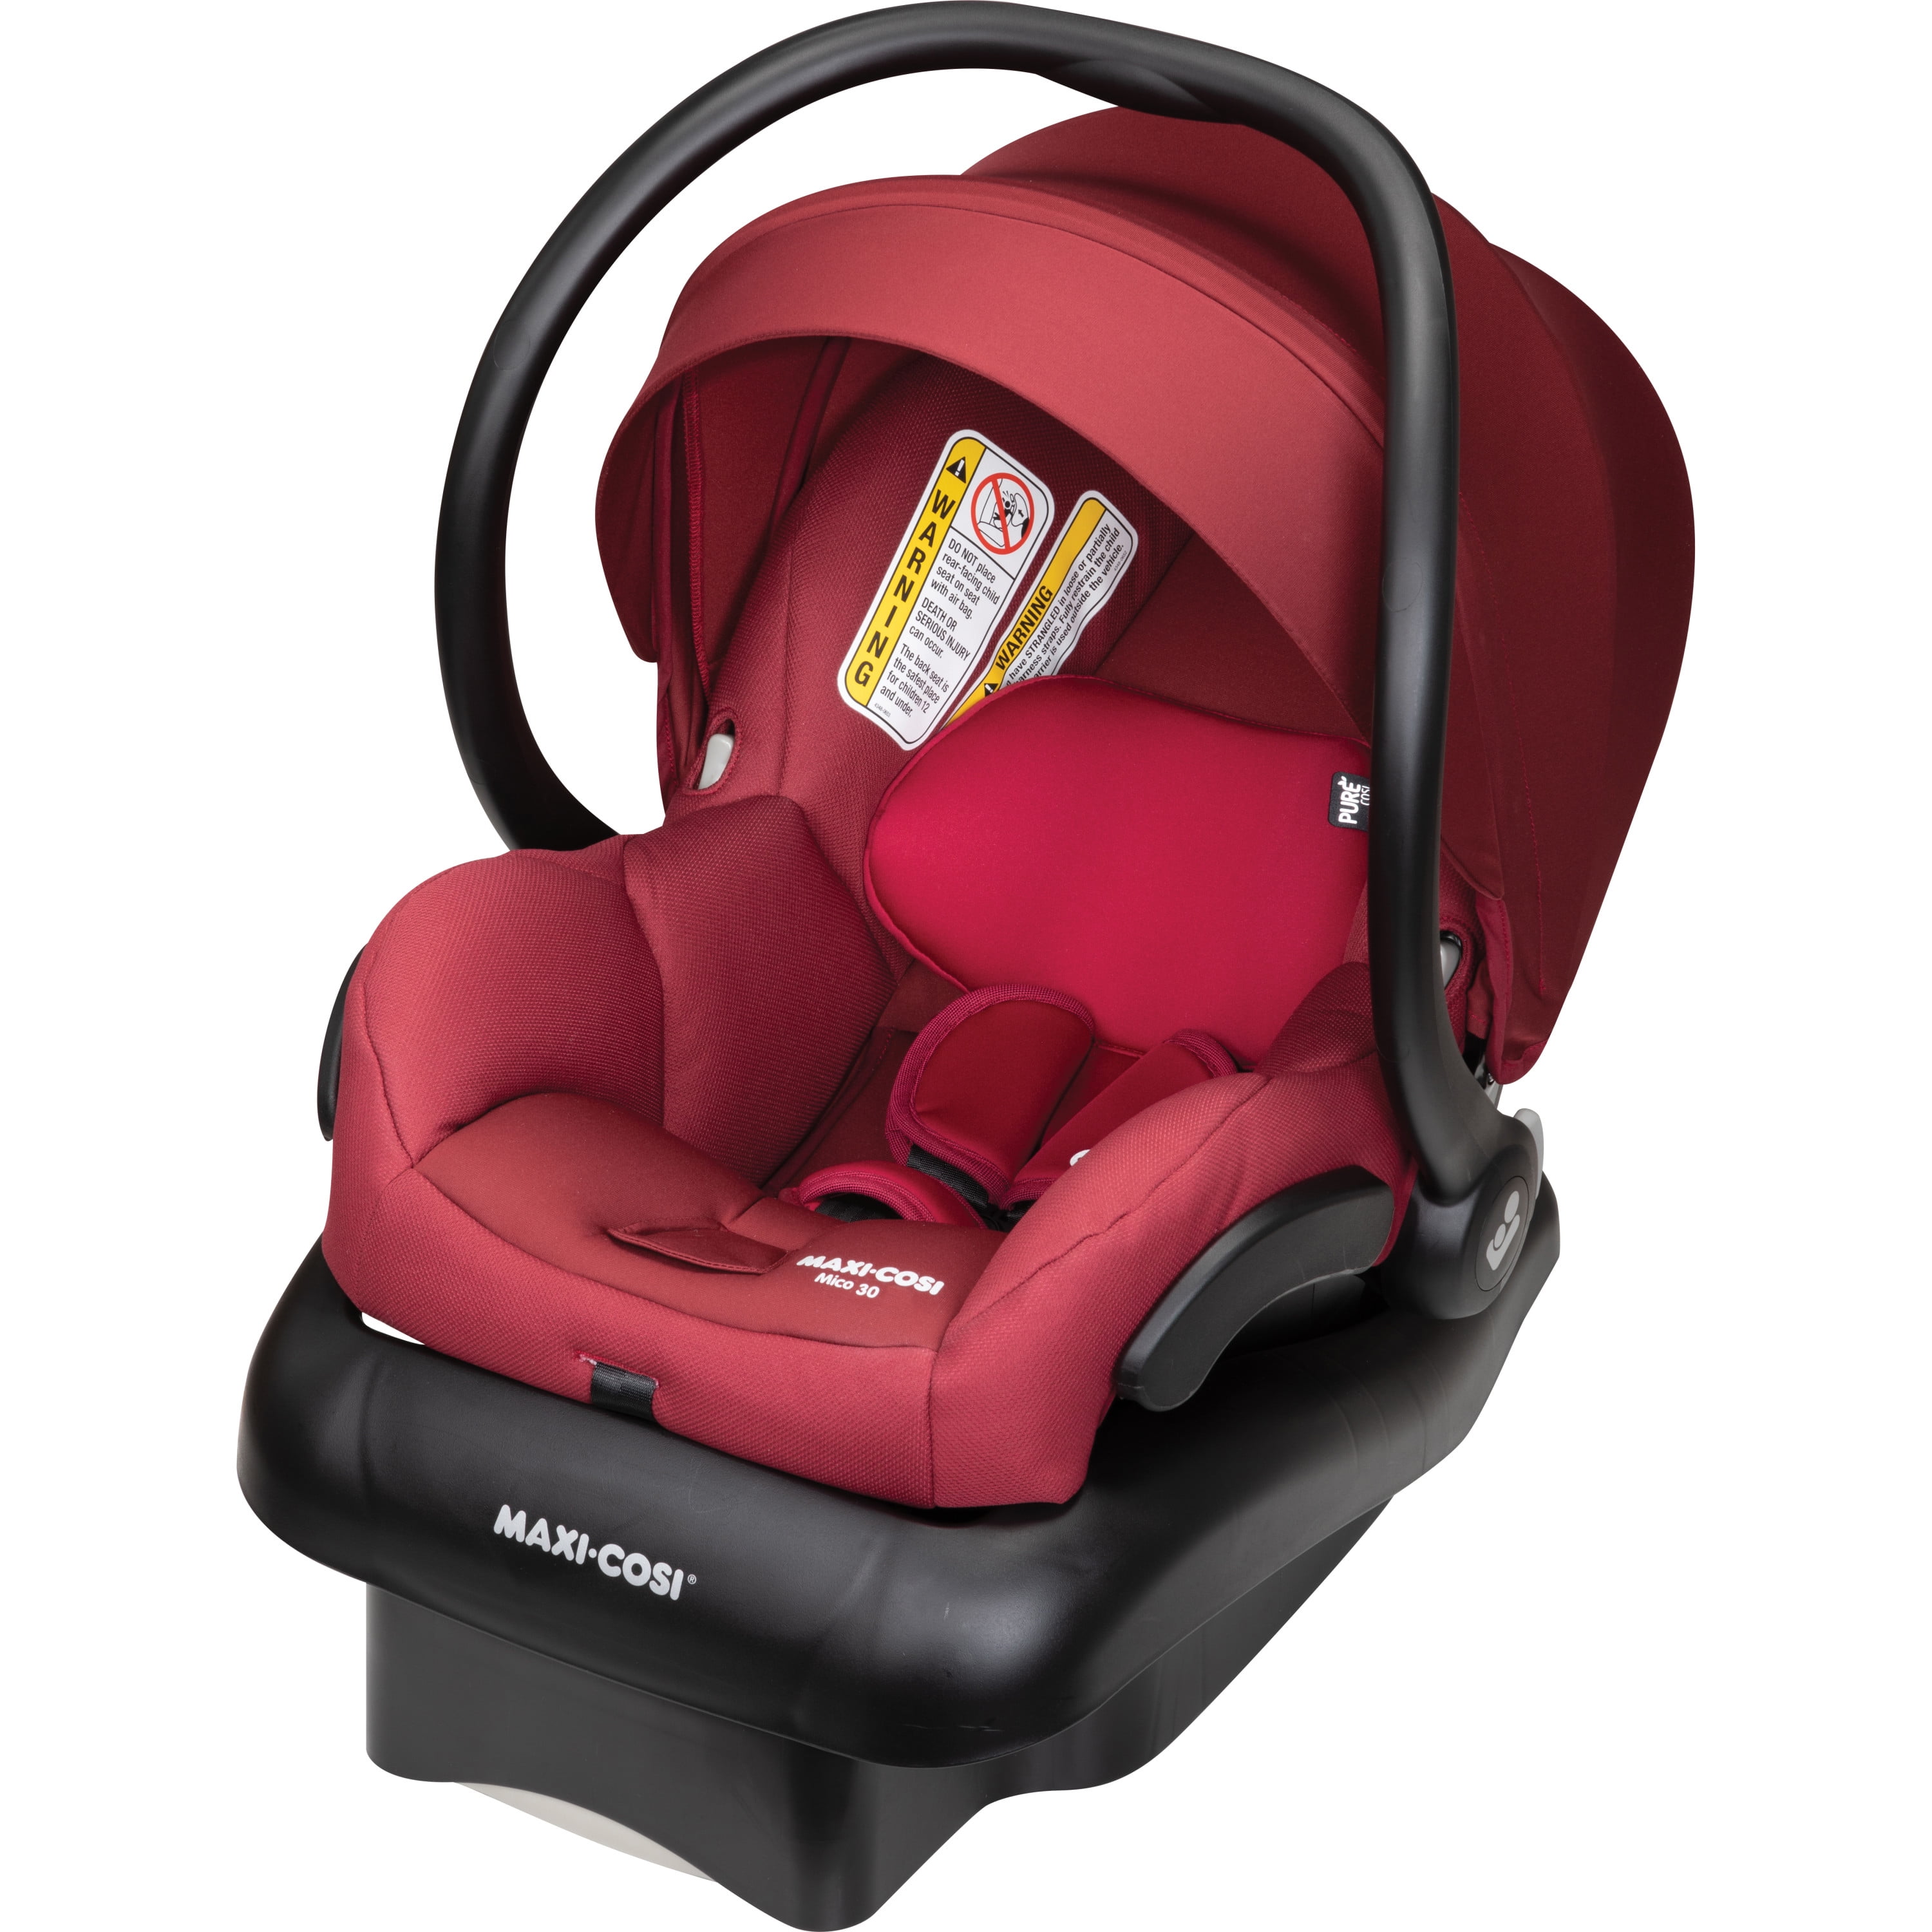 opschorten Pastoor Kinematica Maxi-Cosi Mico 30 Infant Car Seat, Radish Ruby – PureCosi, - Walmart.com